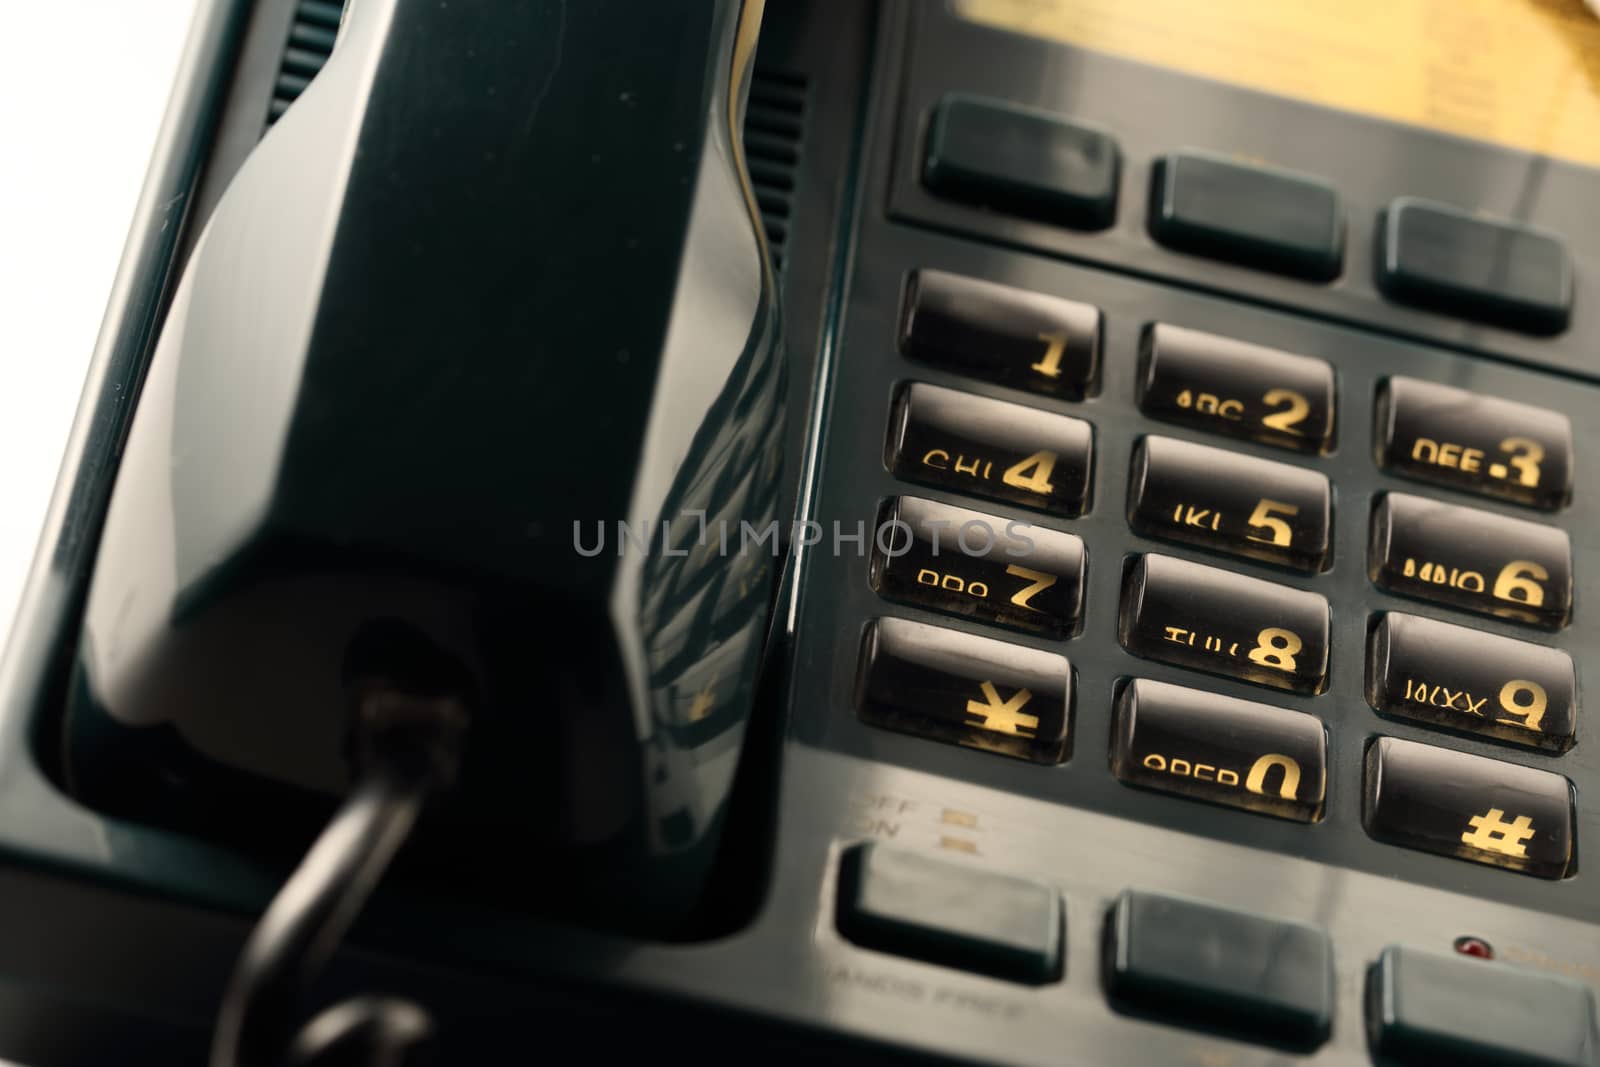 Telephone receiver by Garsya